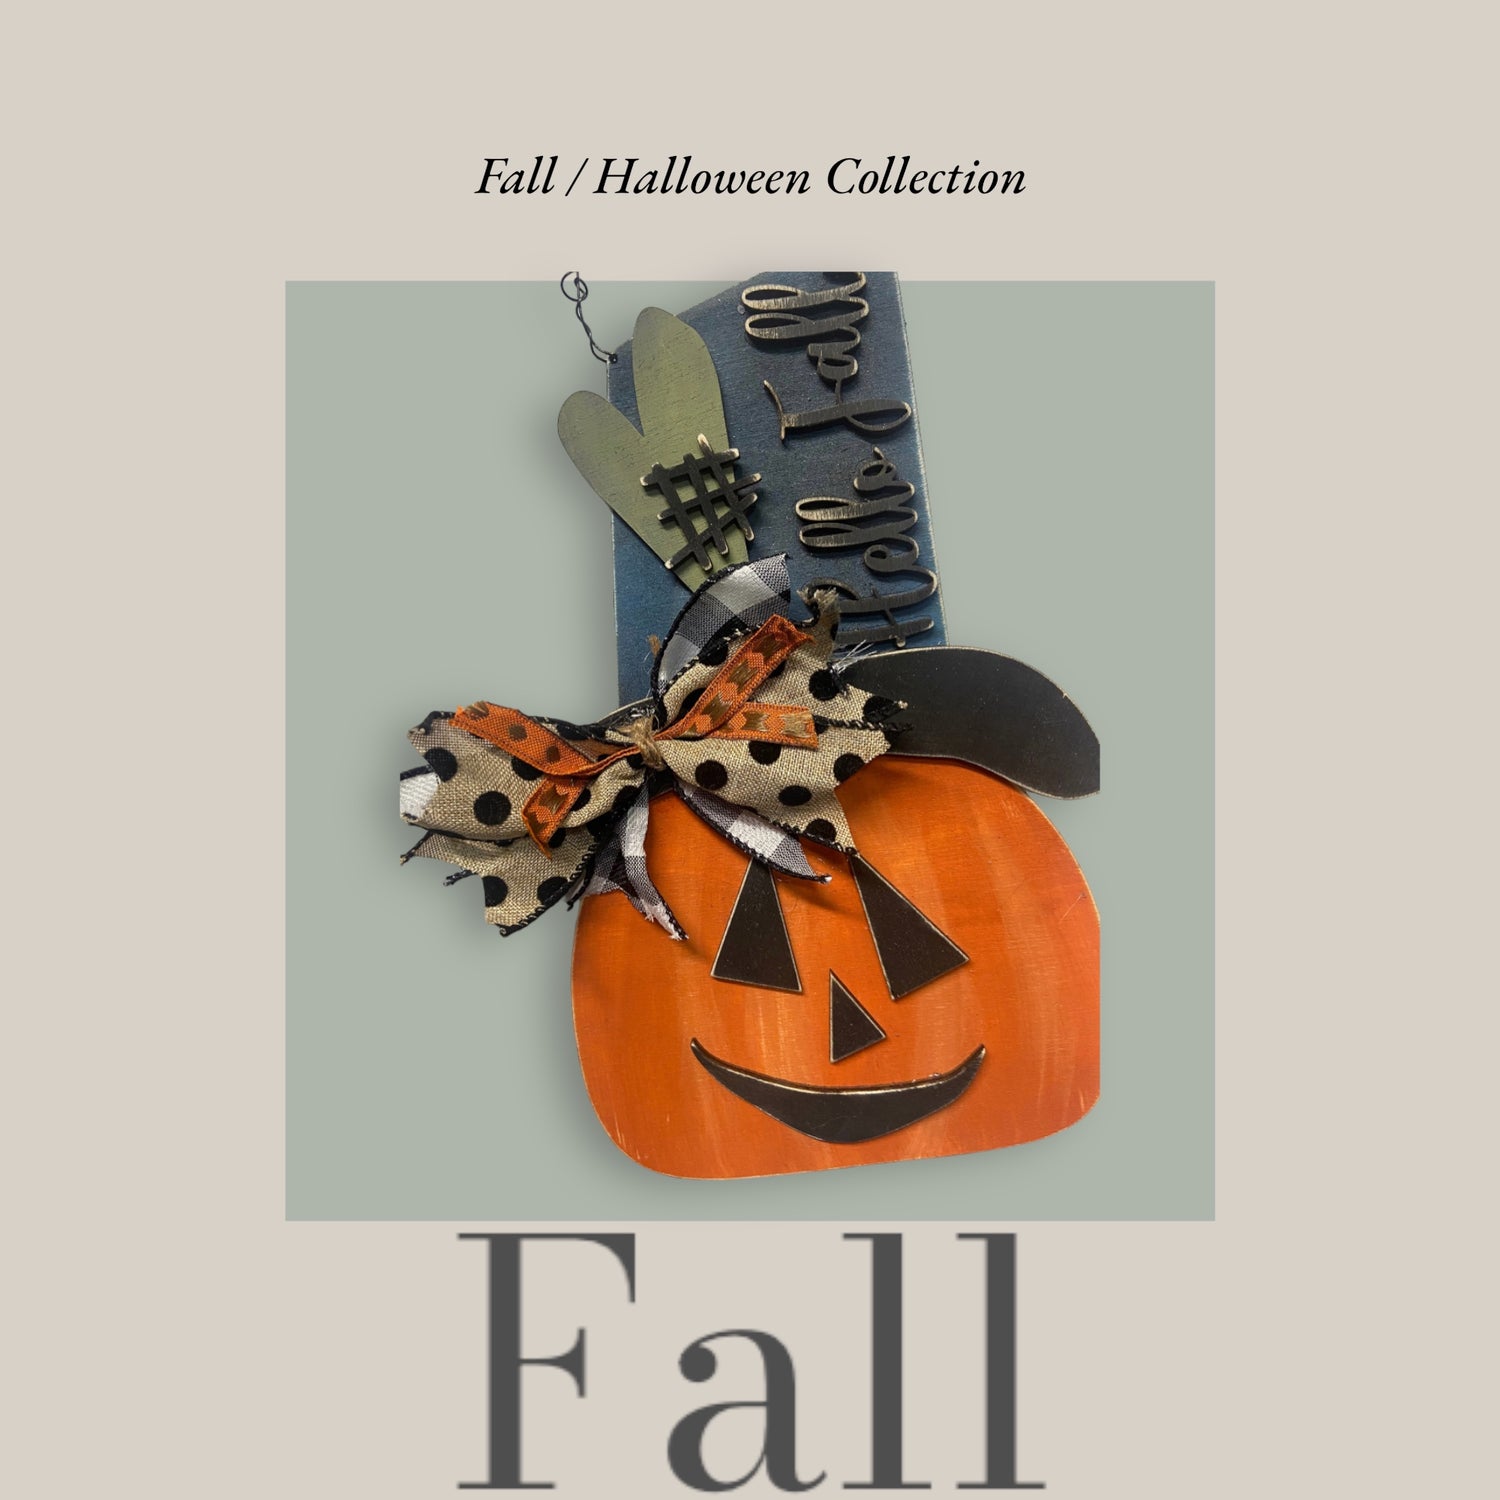 Fall / Halloween